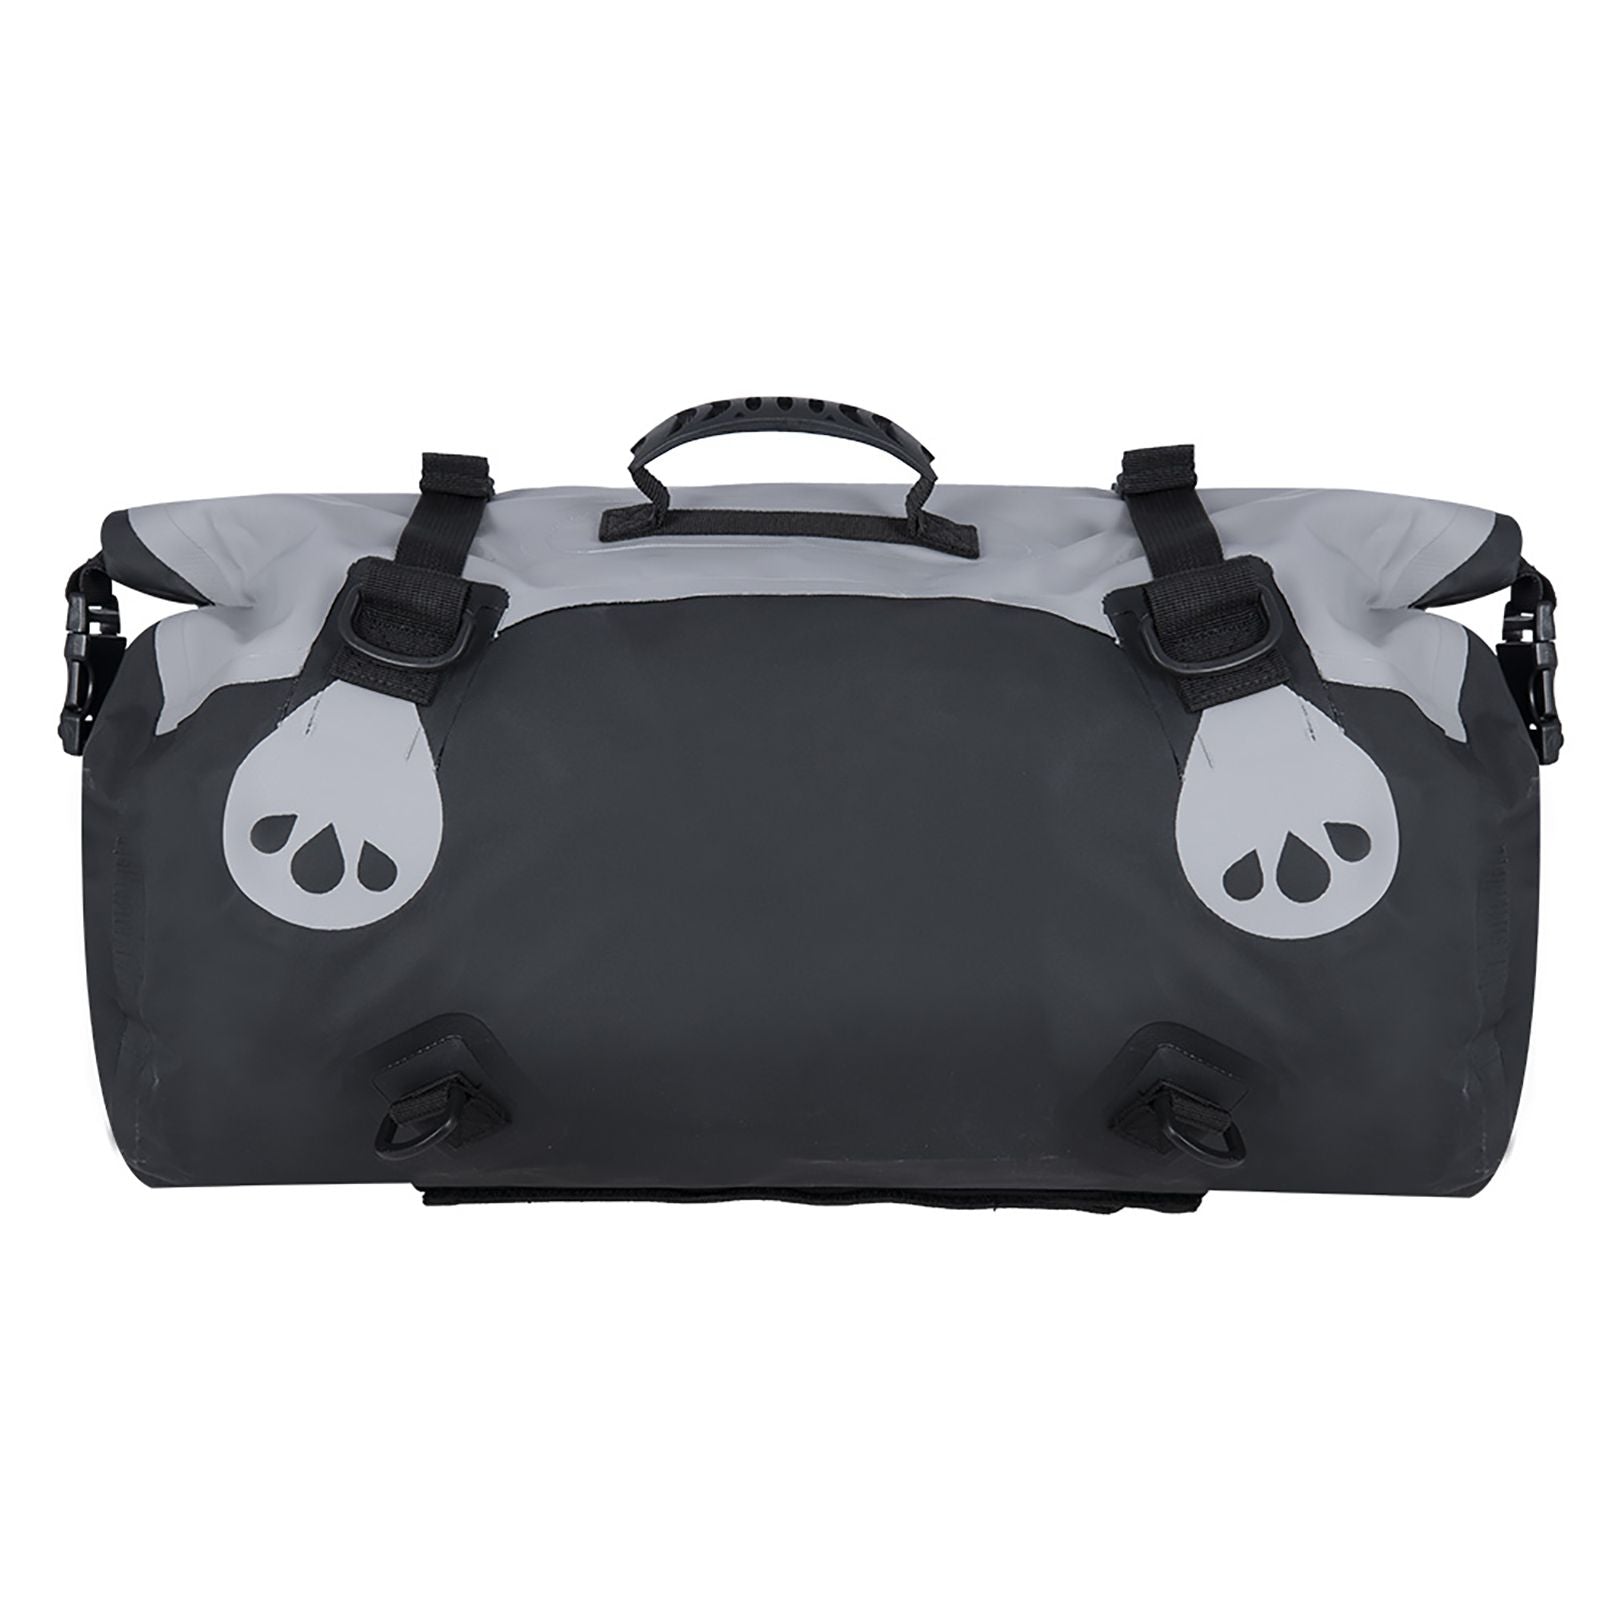 New OXFORD Aqua Roll Bag T30 - Black / Grey #OXOL481